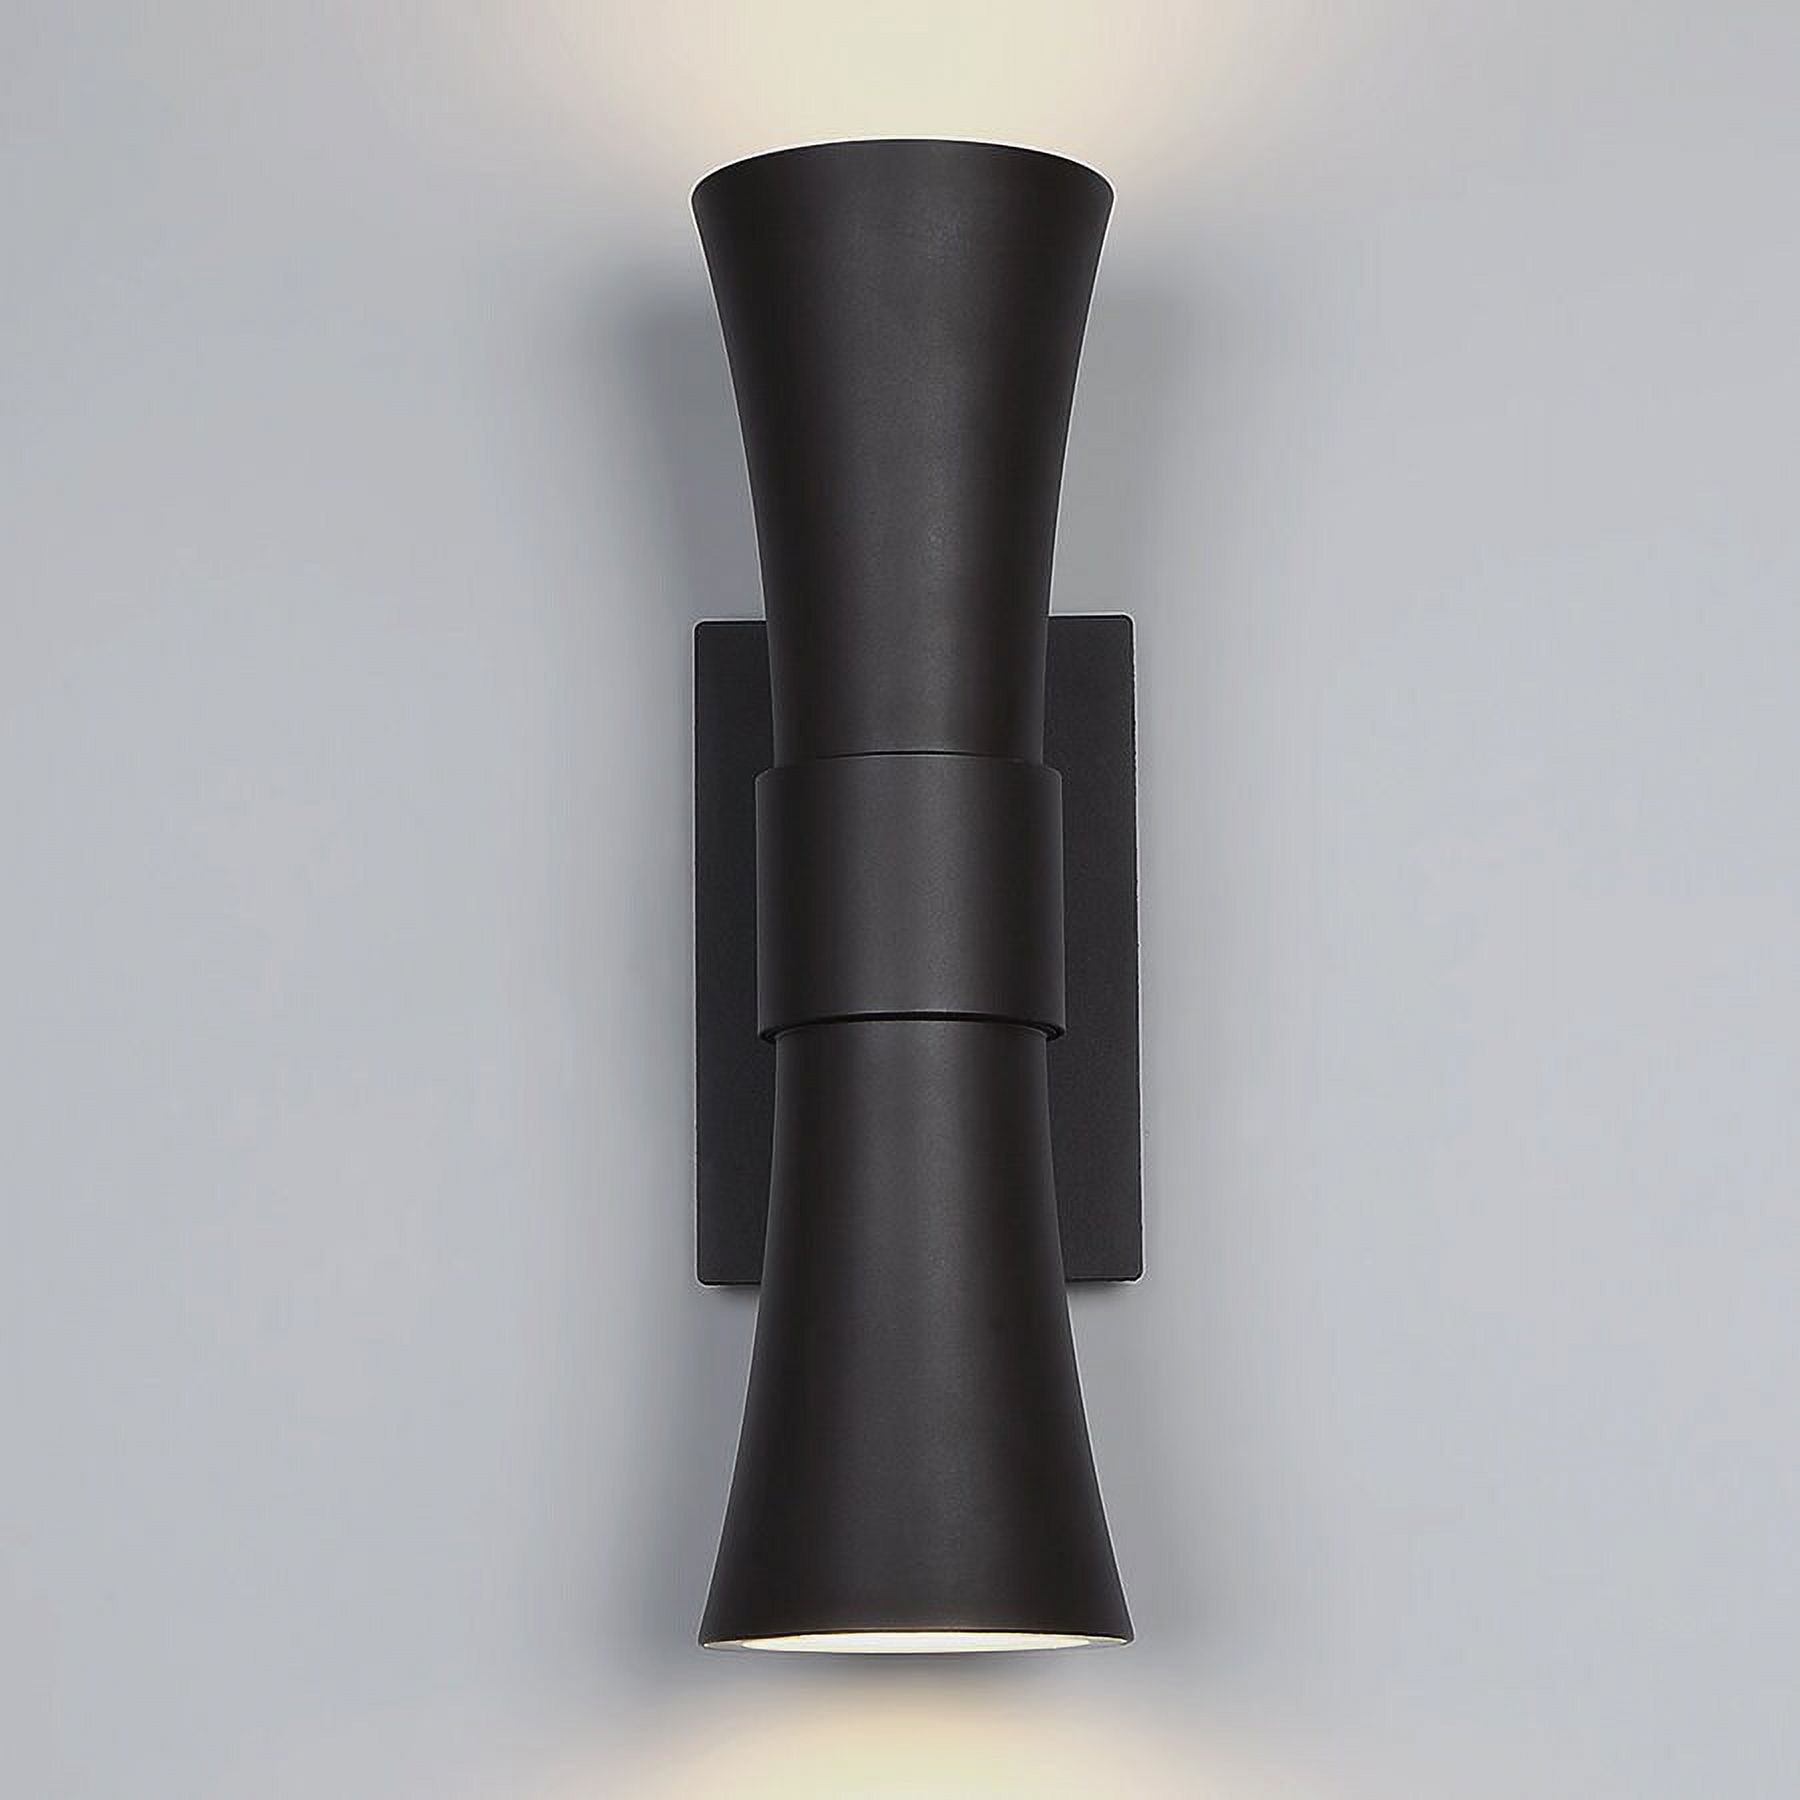 WAC Lighting Funnel Black Aluminum LED Outdoor Wall Light - image 3 of 5